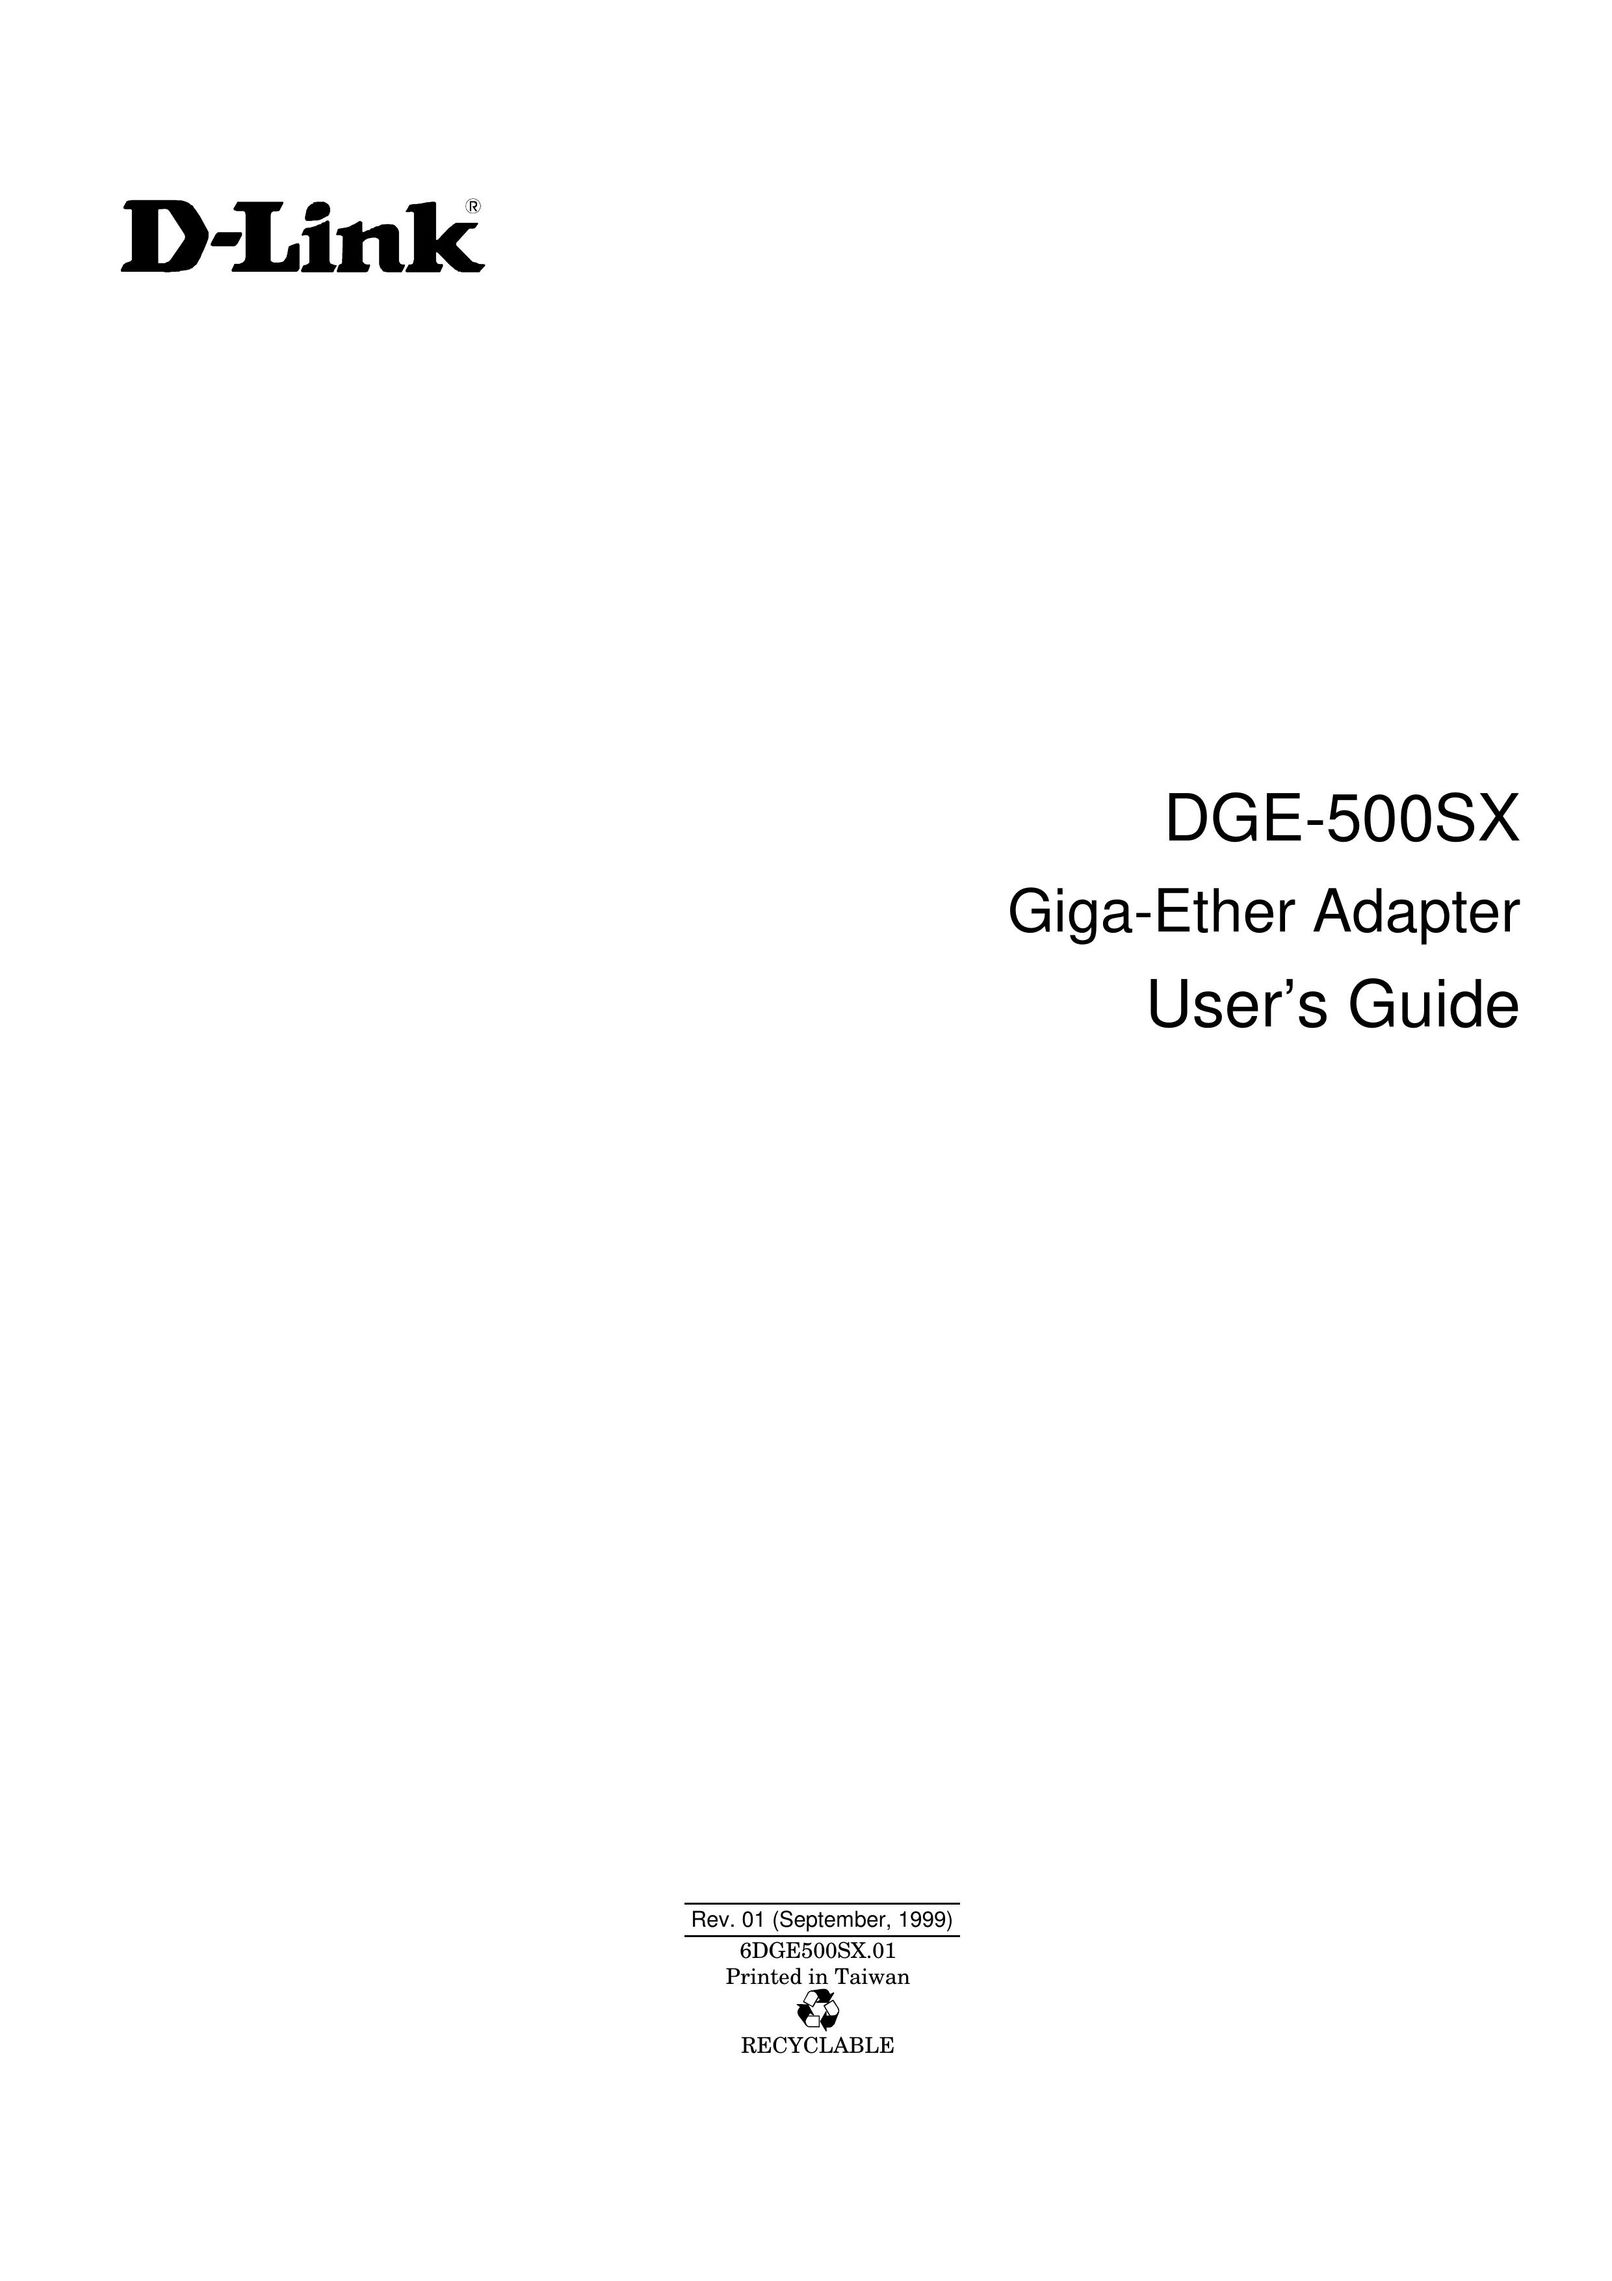 D-Link DGE-500SX Network Card User Manual